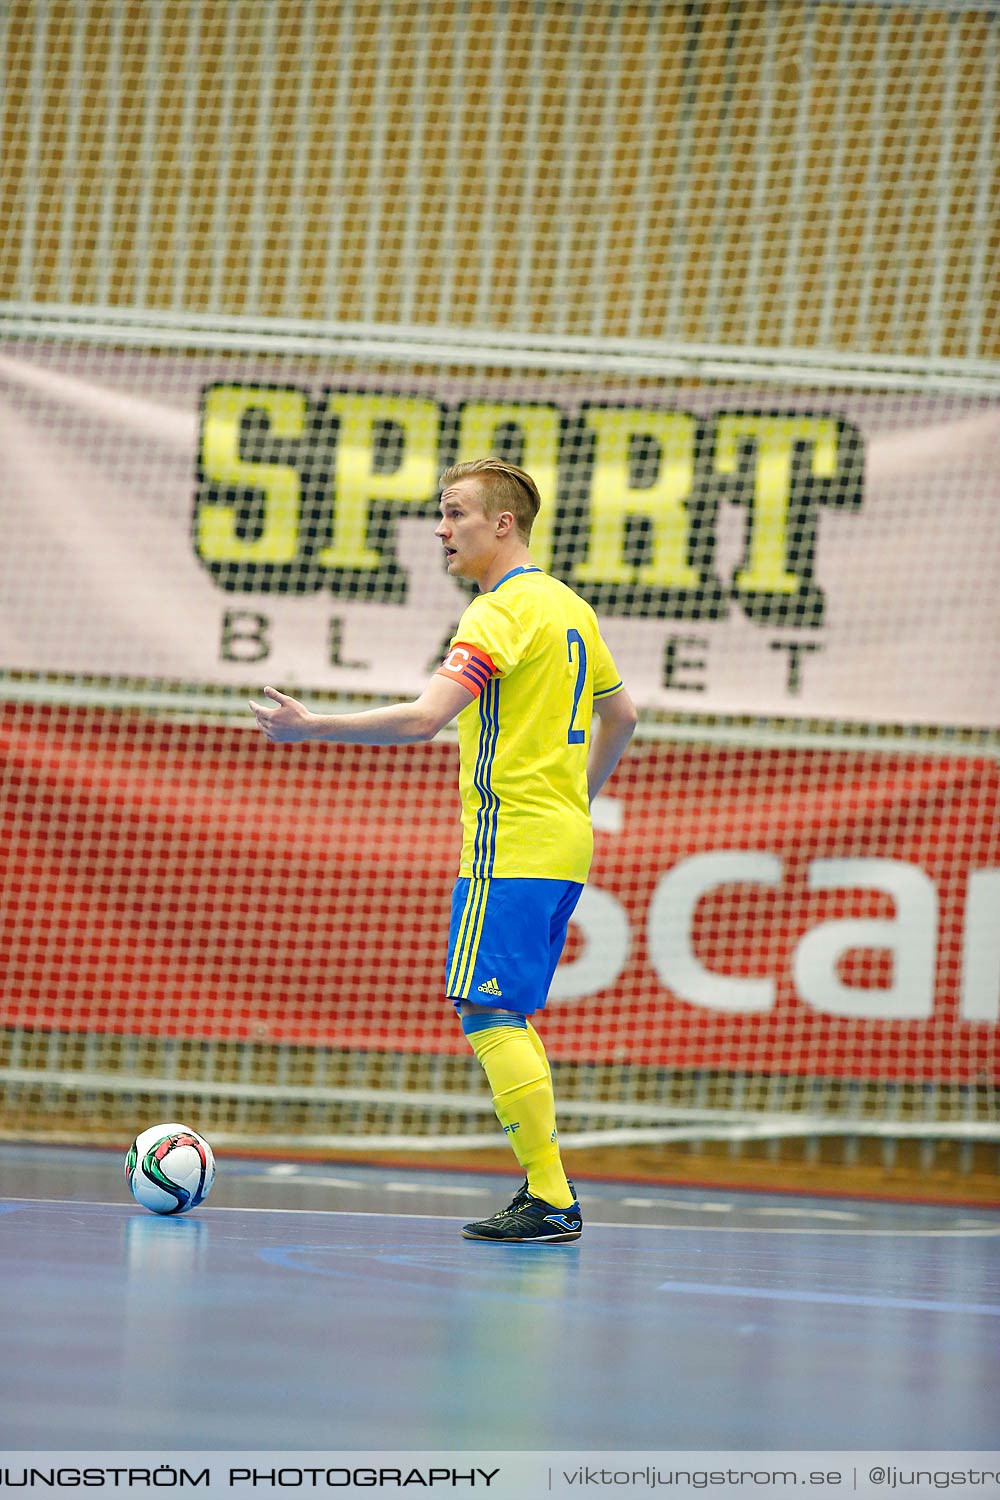 Landskamp Sverige-Finland 3-6,herr,Arena Skövde,Skövde,Sverige,Futsal,,2016,176910